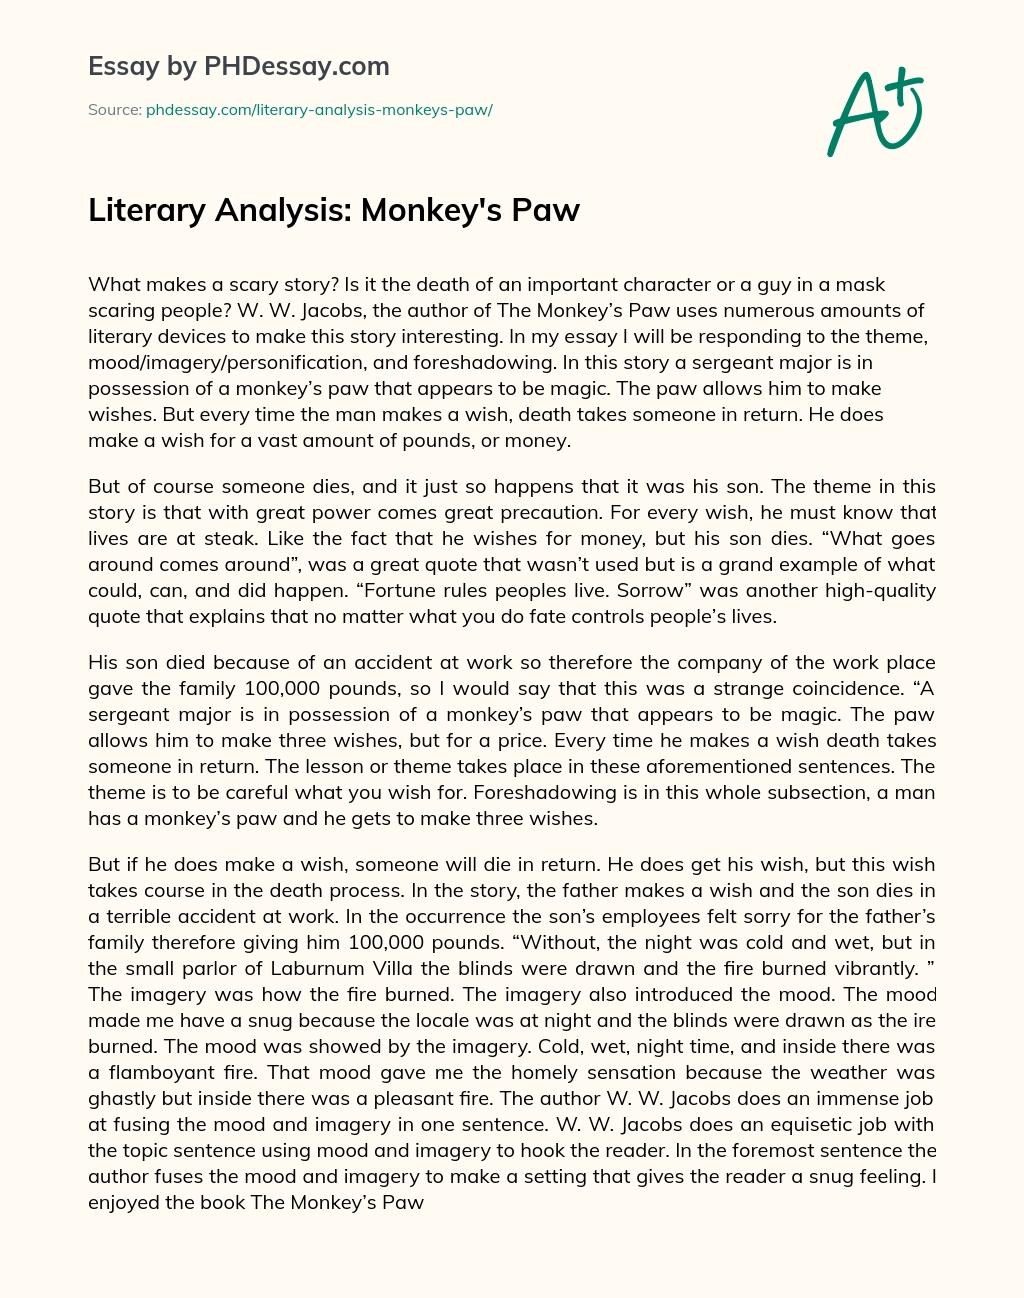 Literary Monkey's Paw PHDessay.com